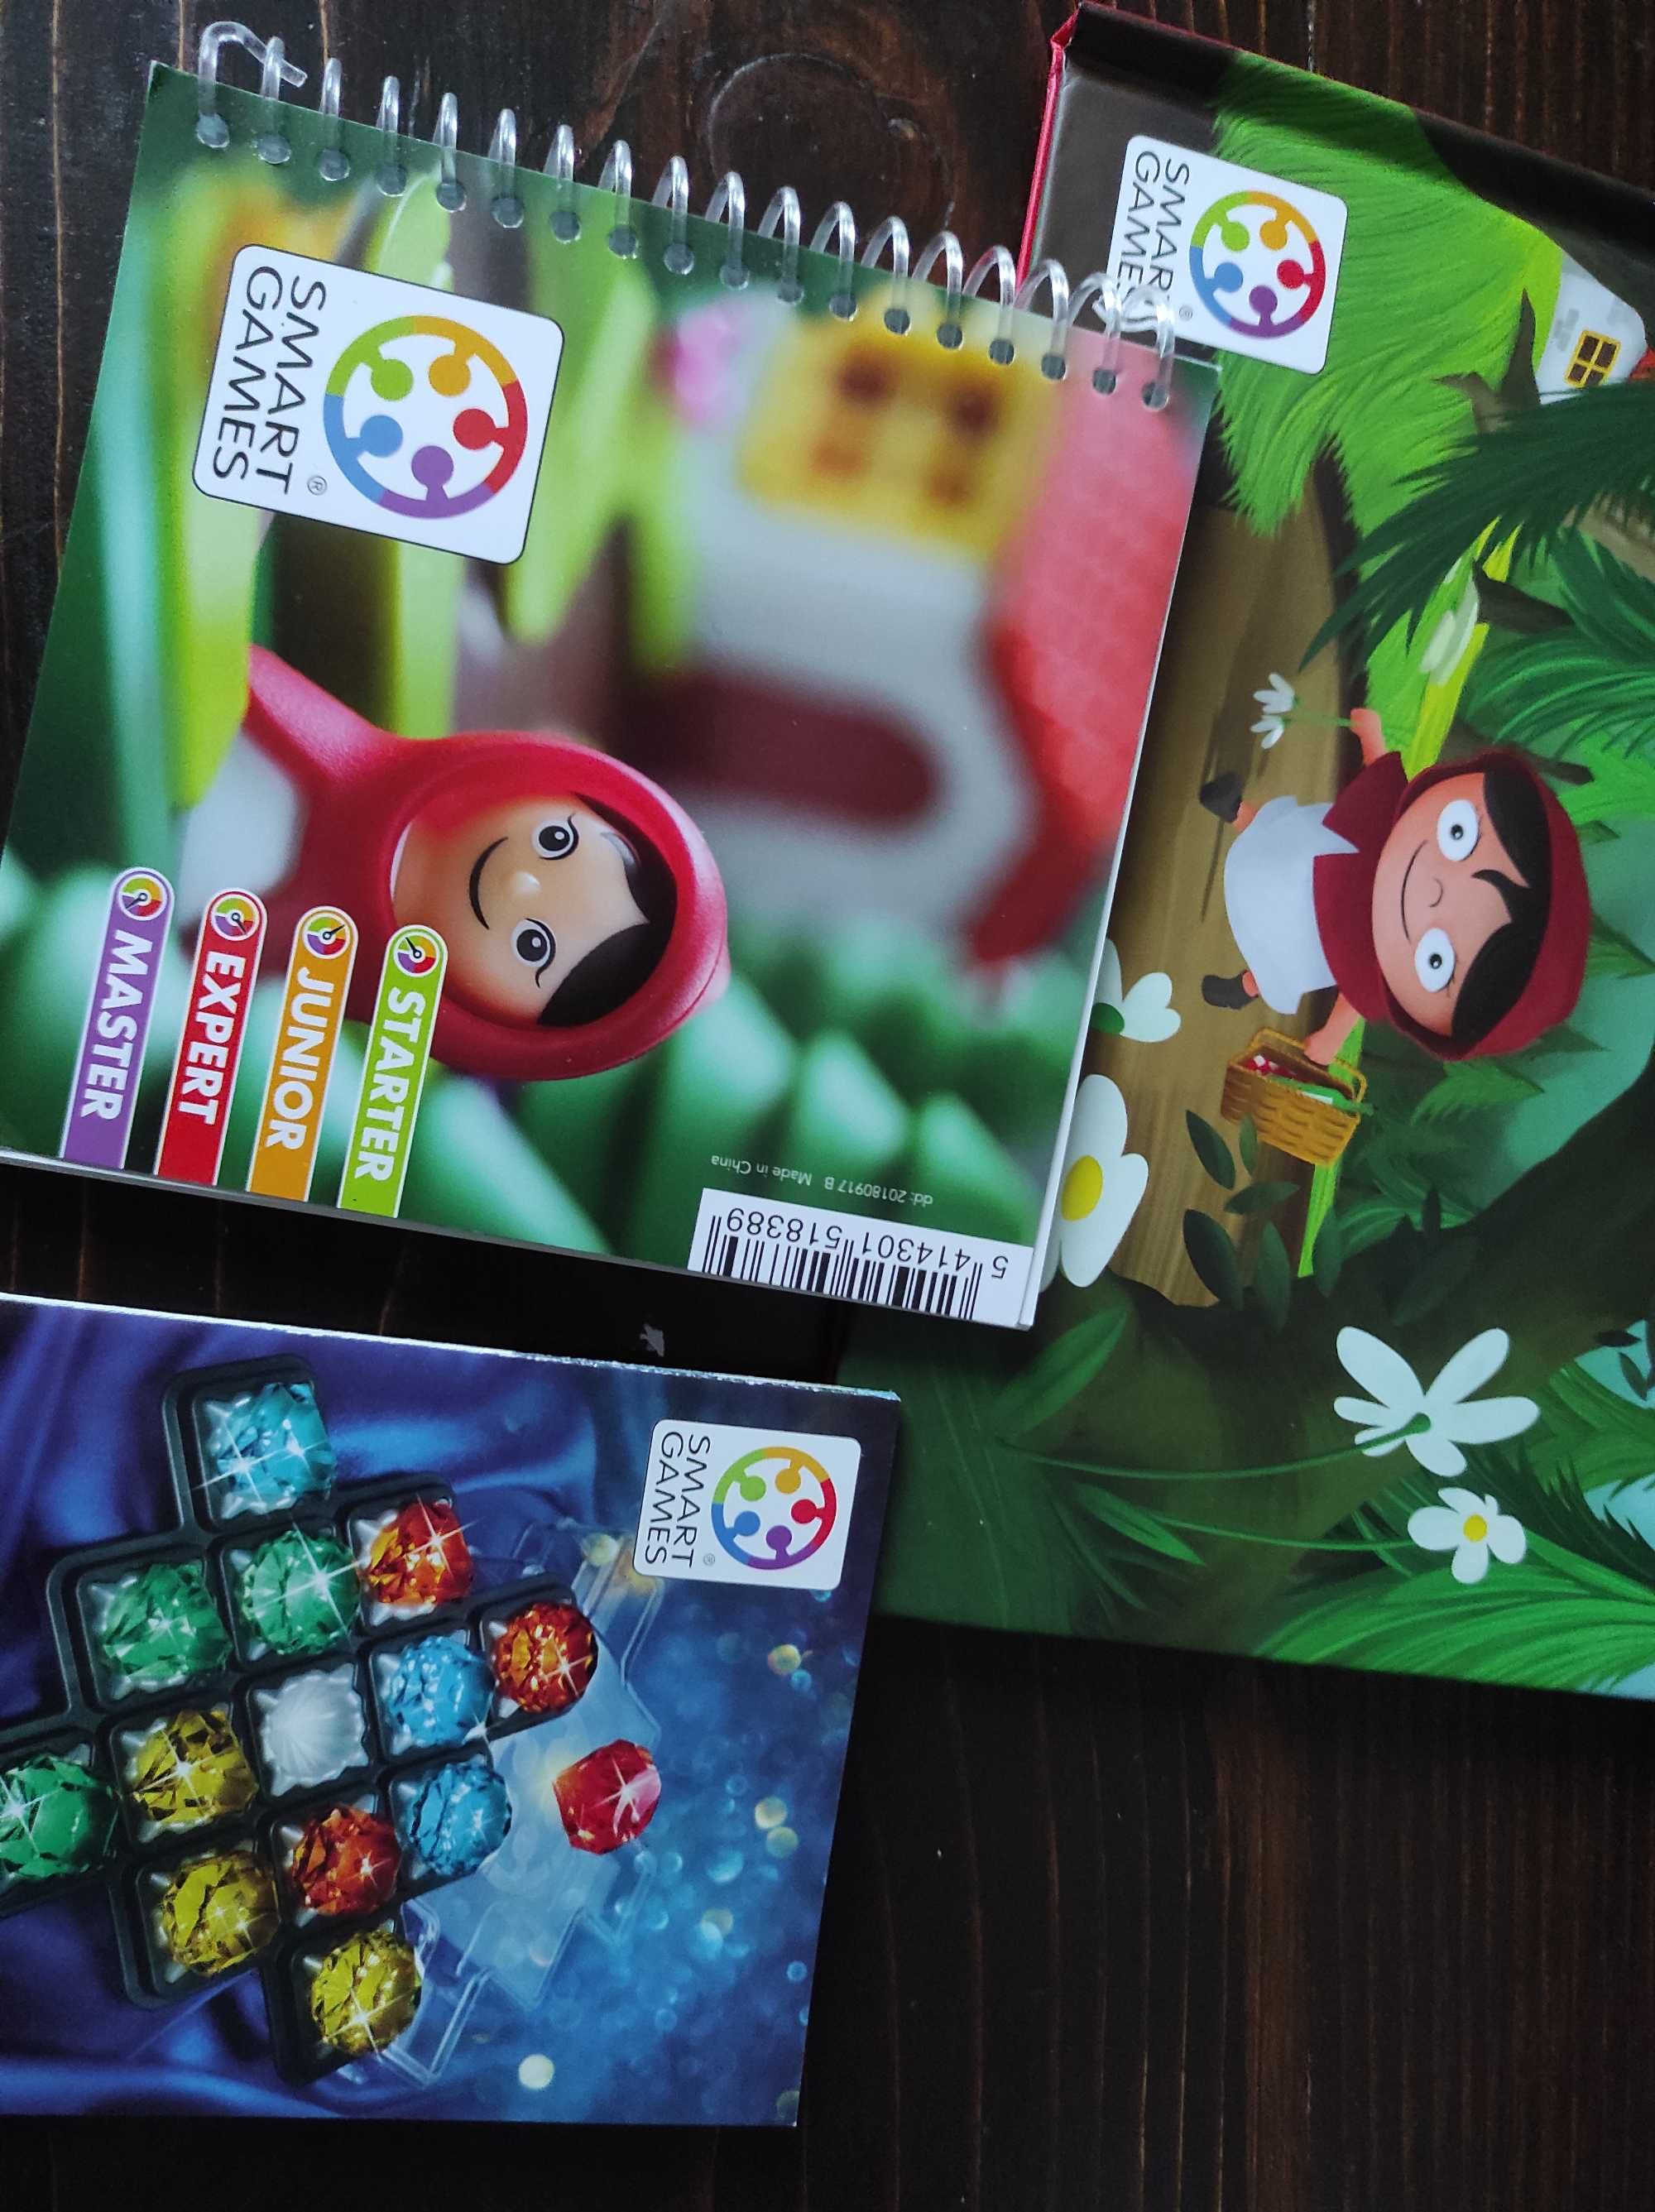 Gra planszowa Czerwony kapturek IUVI Smart games 4-7 lat Montessori